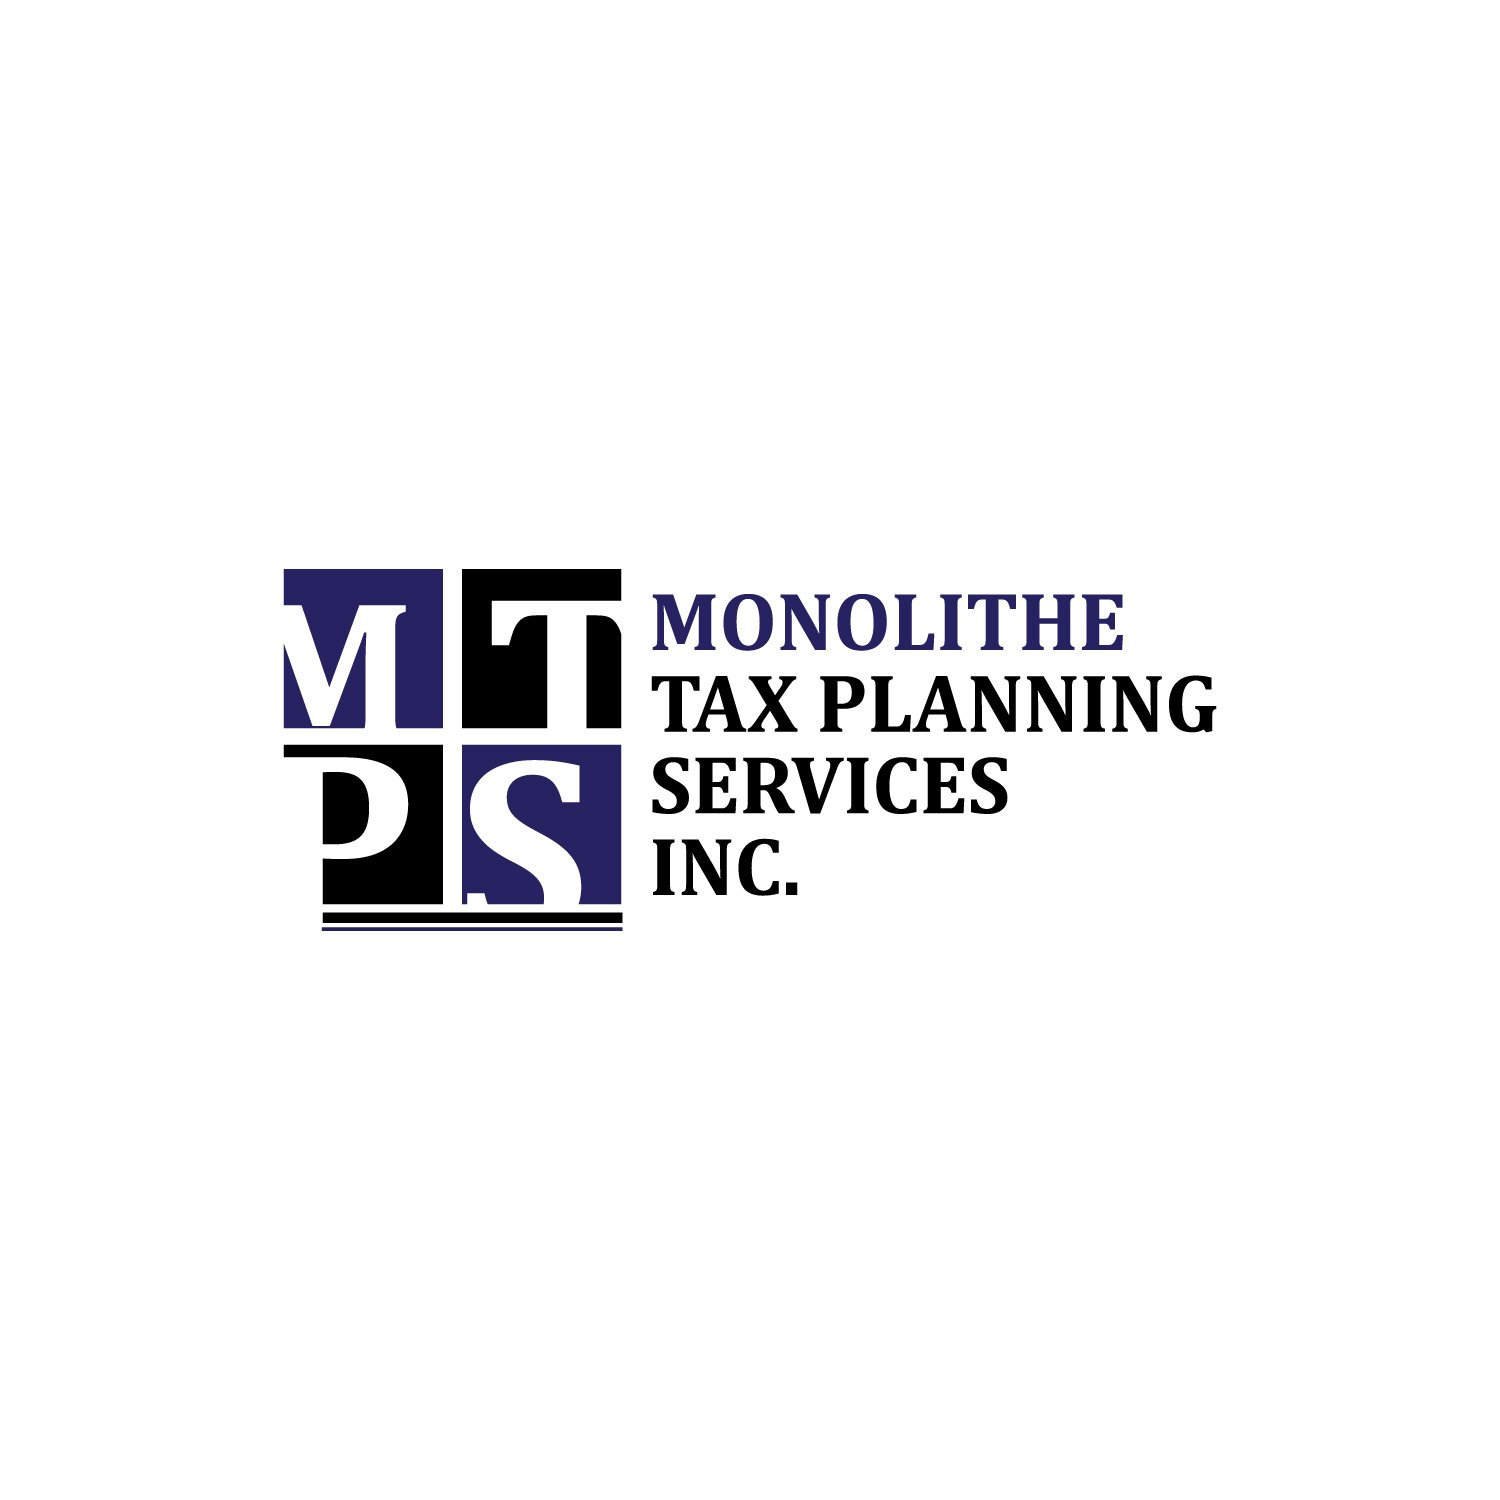 Monolithe Tax Planning Services, Inc.